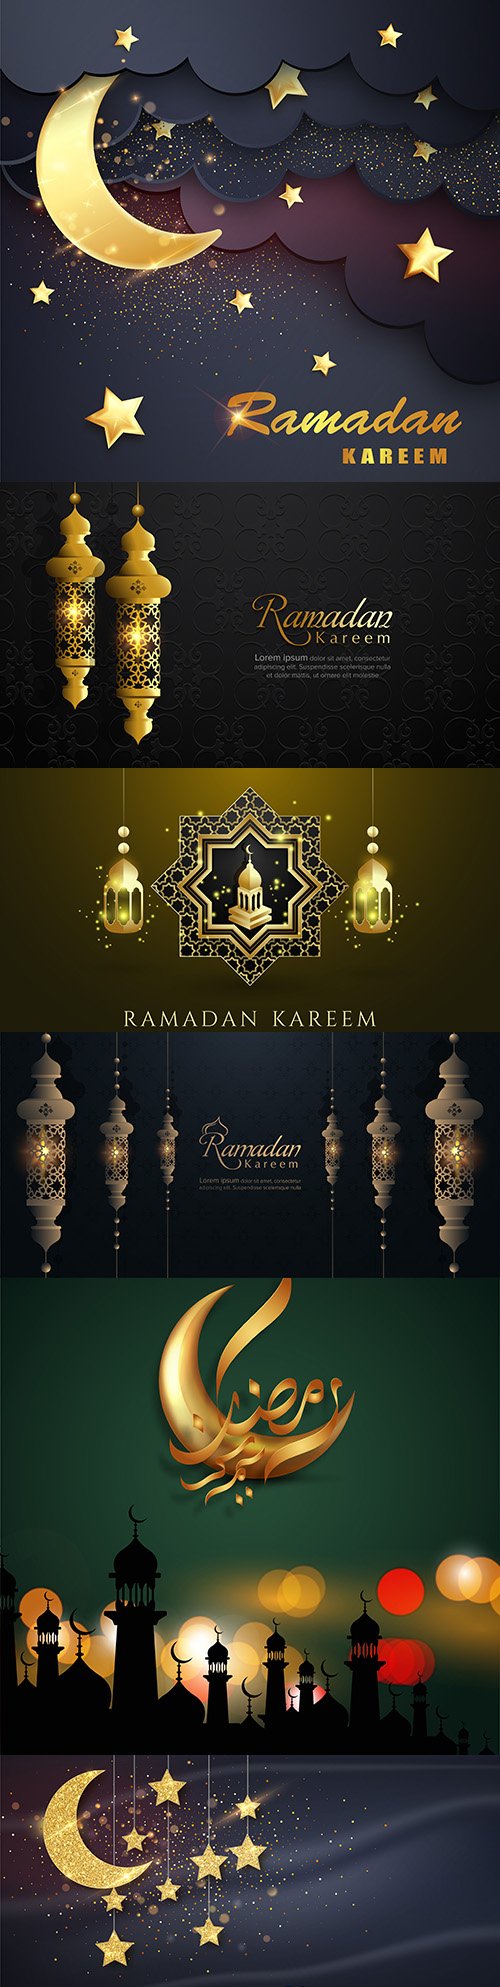 Ramadan Kareem moon and luxurious Islamic background elements